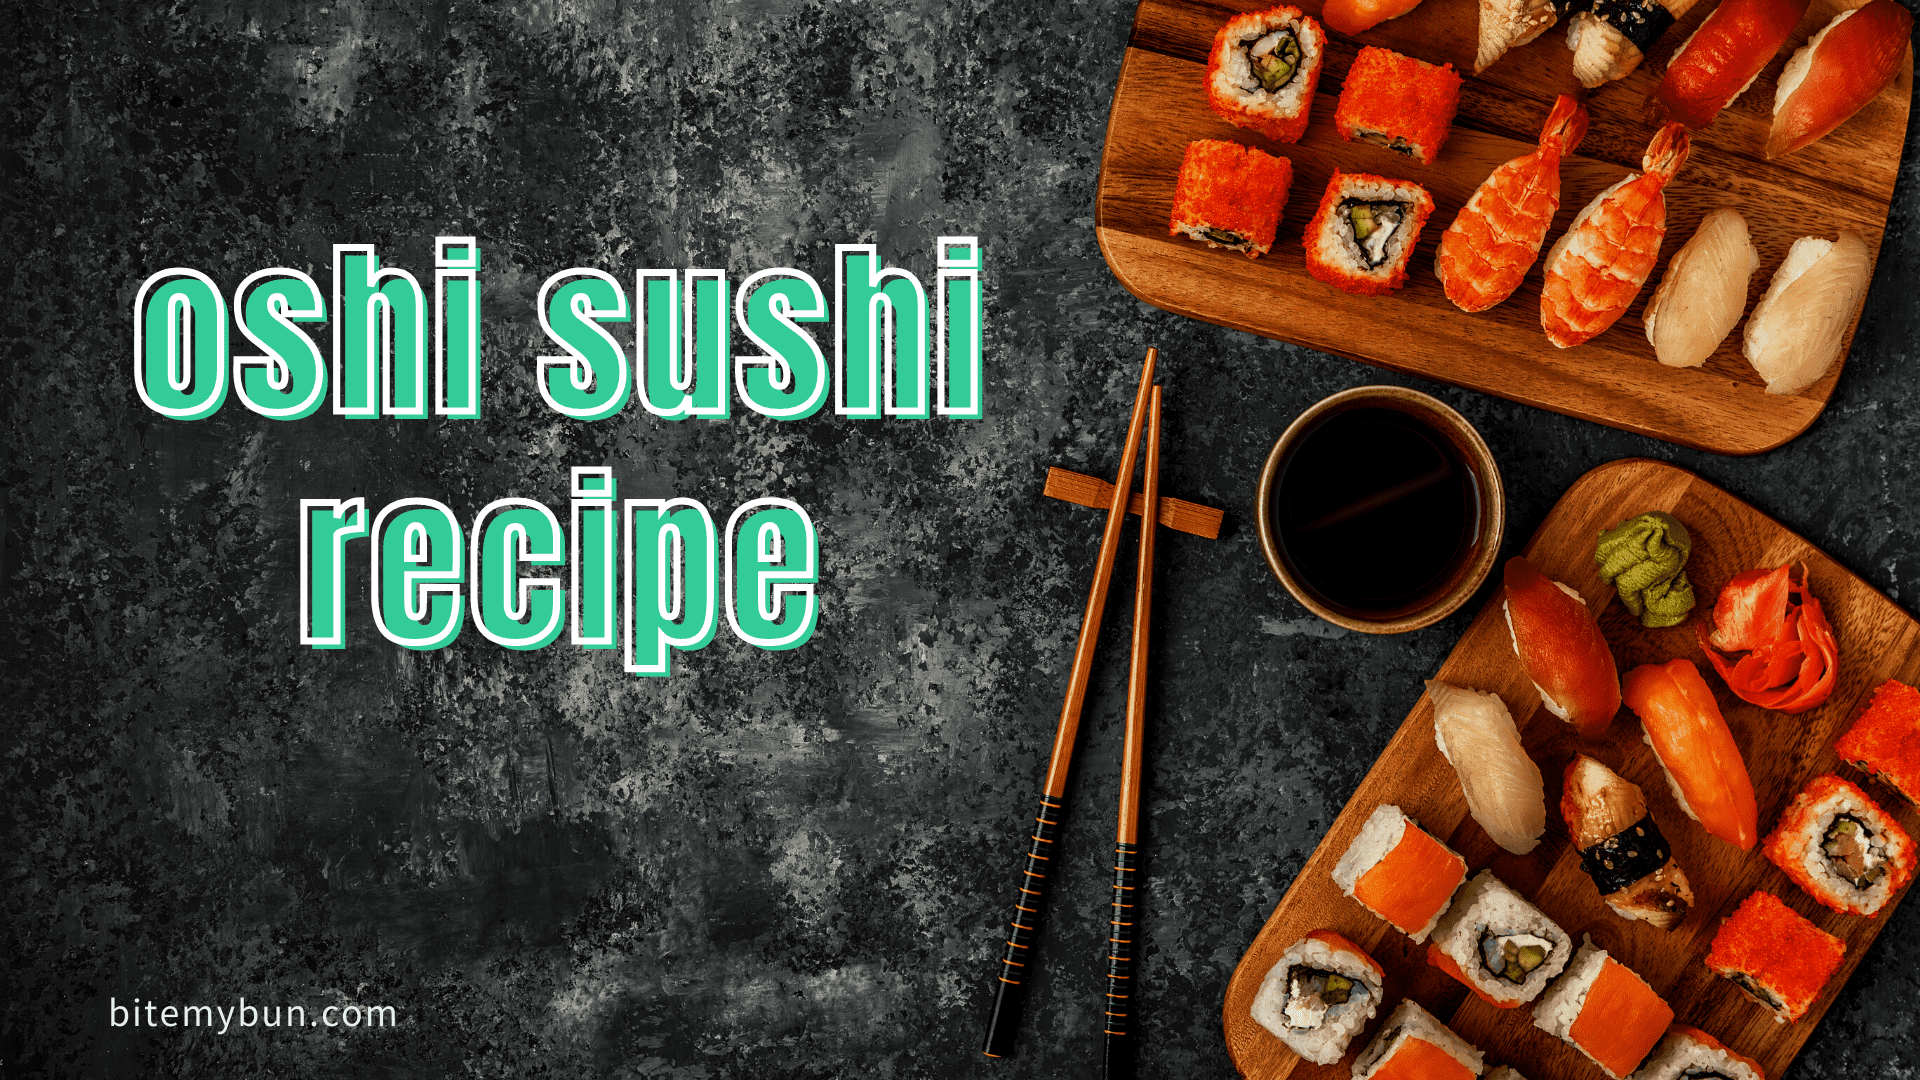 Oshi sushi recipe | The famous box sushi explained + how to make it yourself